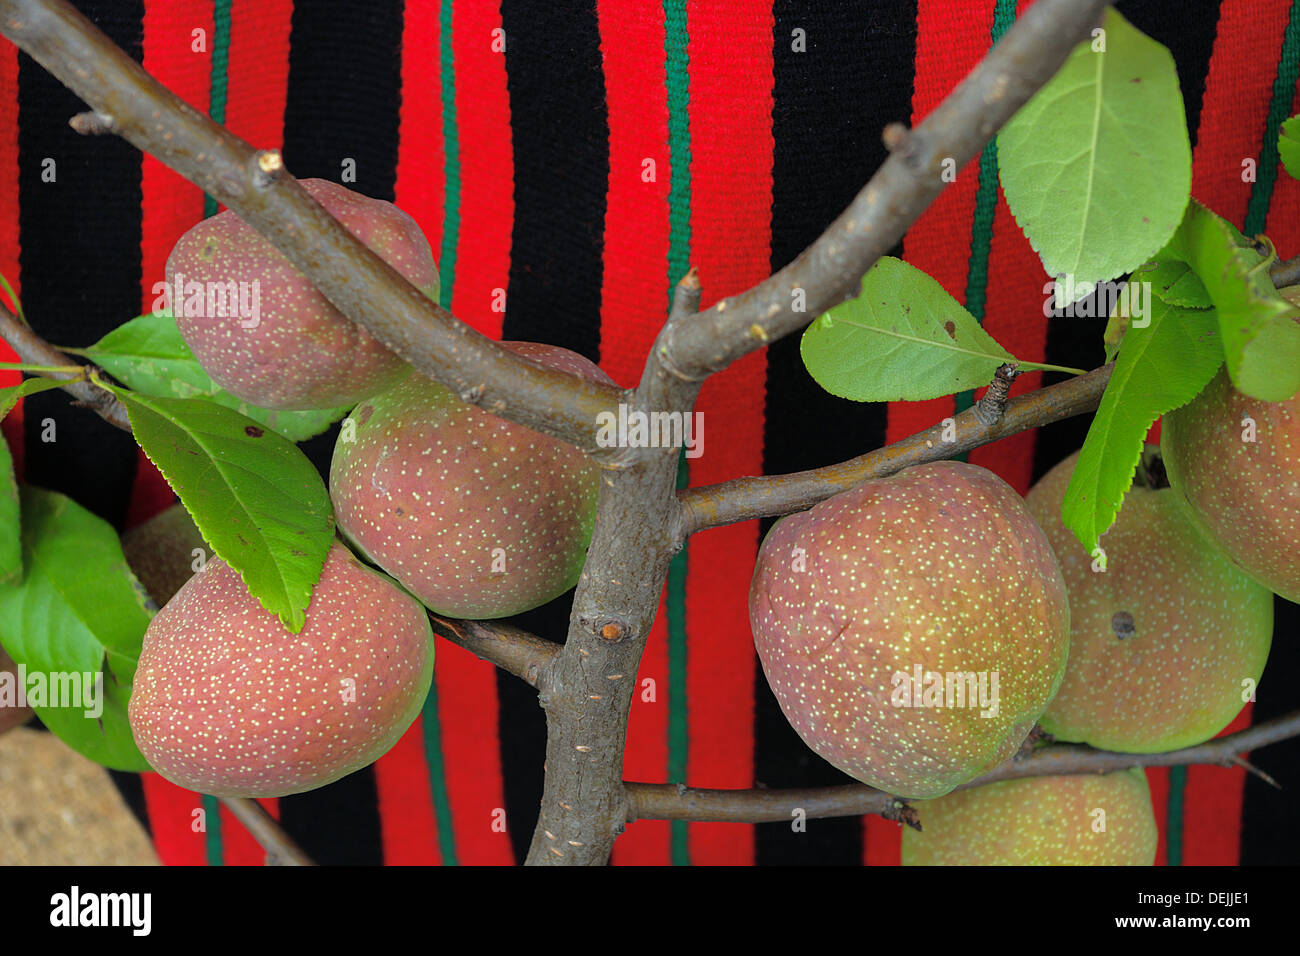 Quince fruits (Chaenomeles superba) Stock Photo